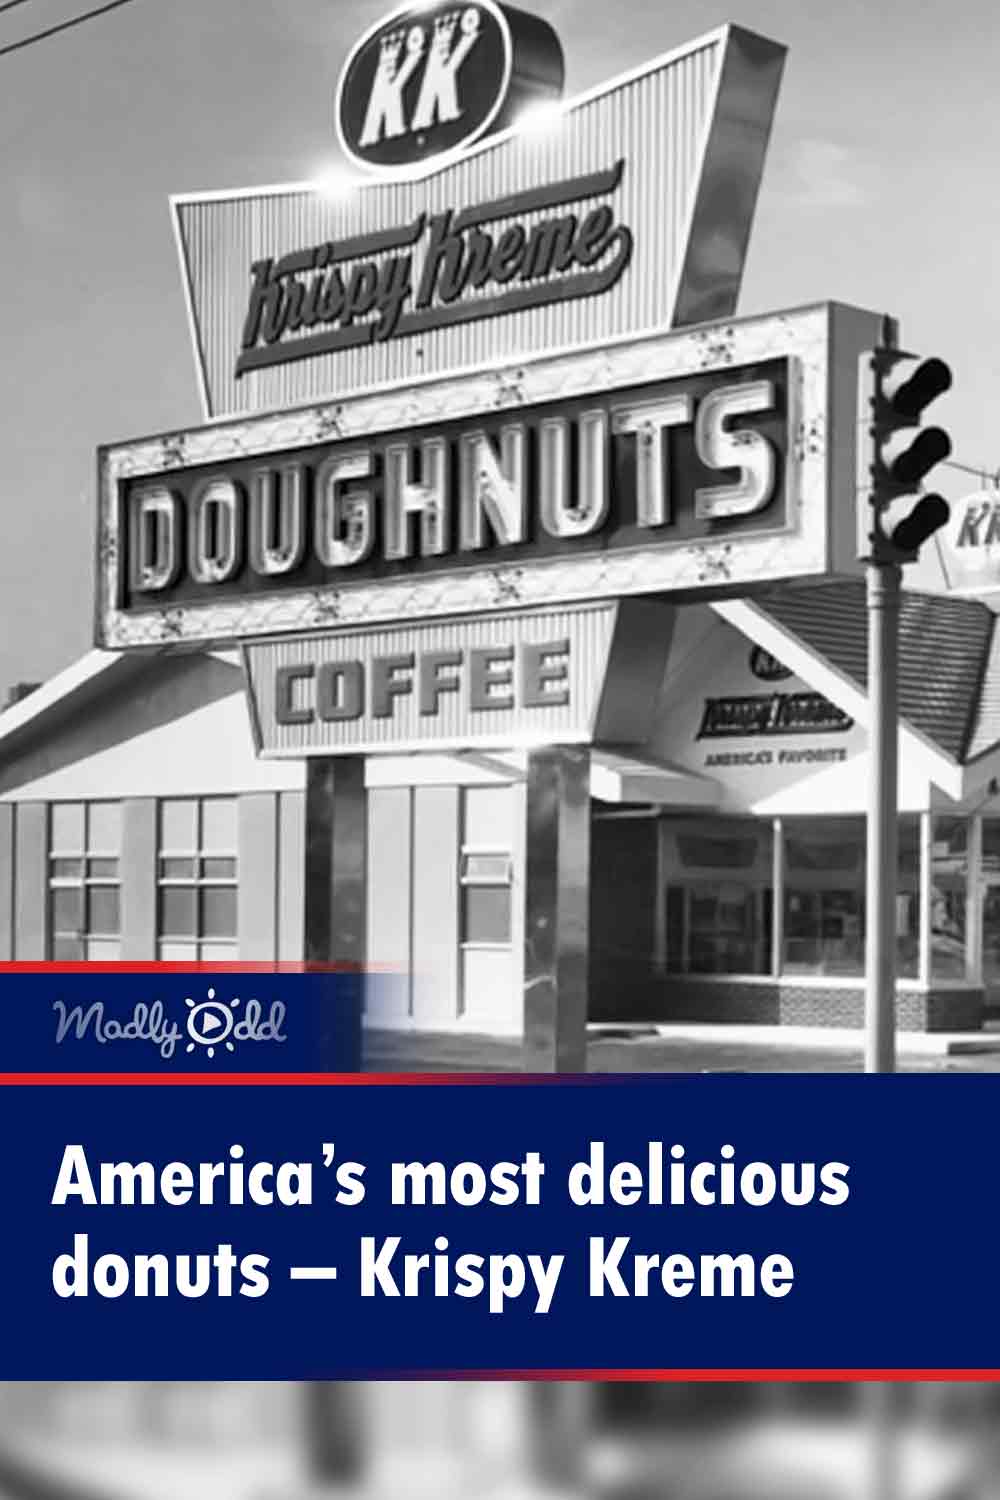 America’s most delicious donuts – Krispy Kreme